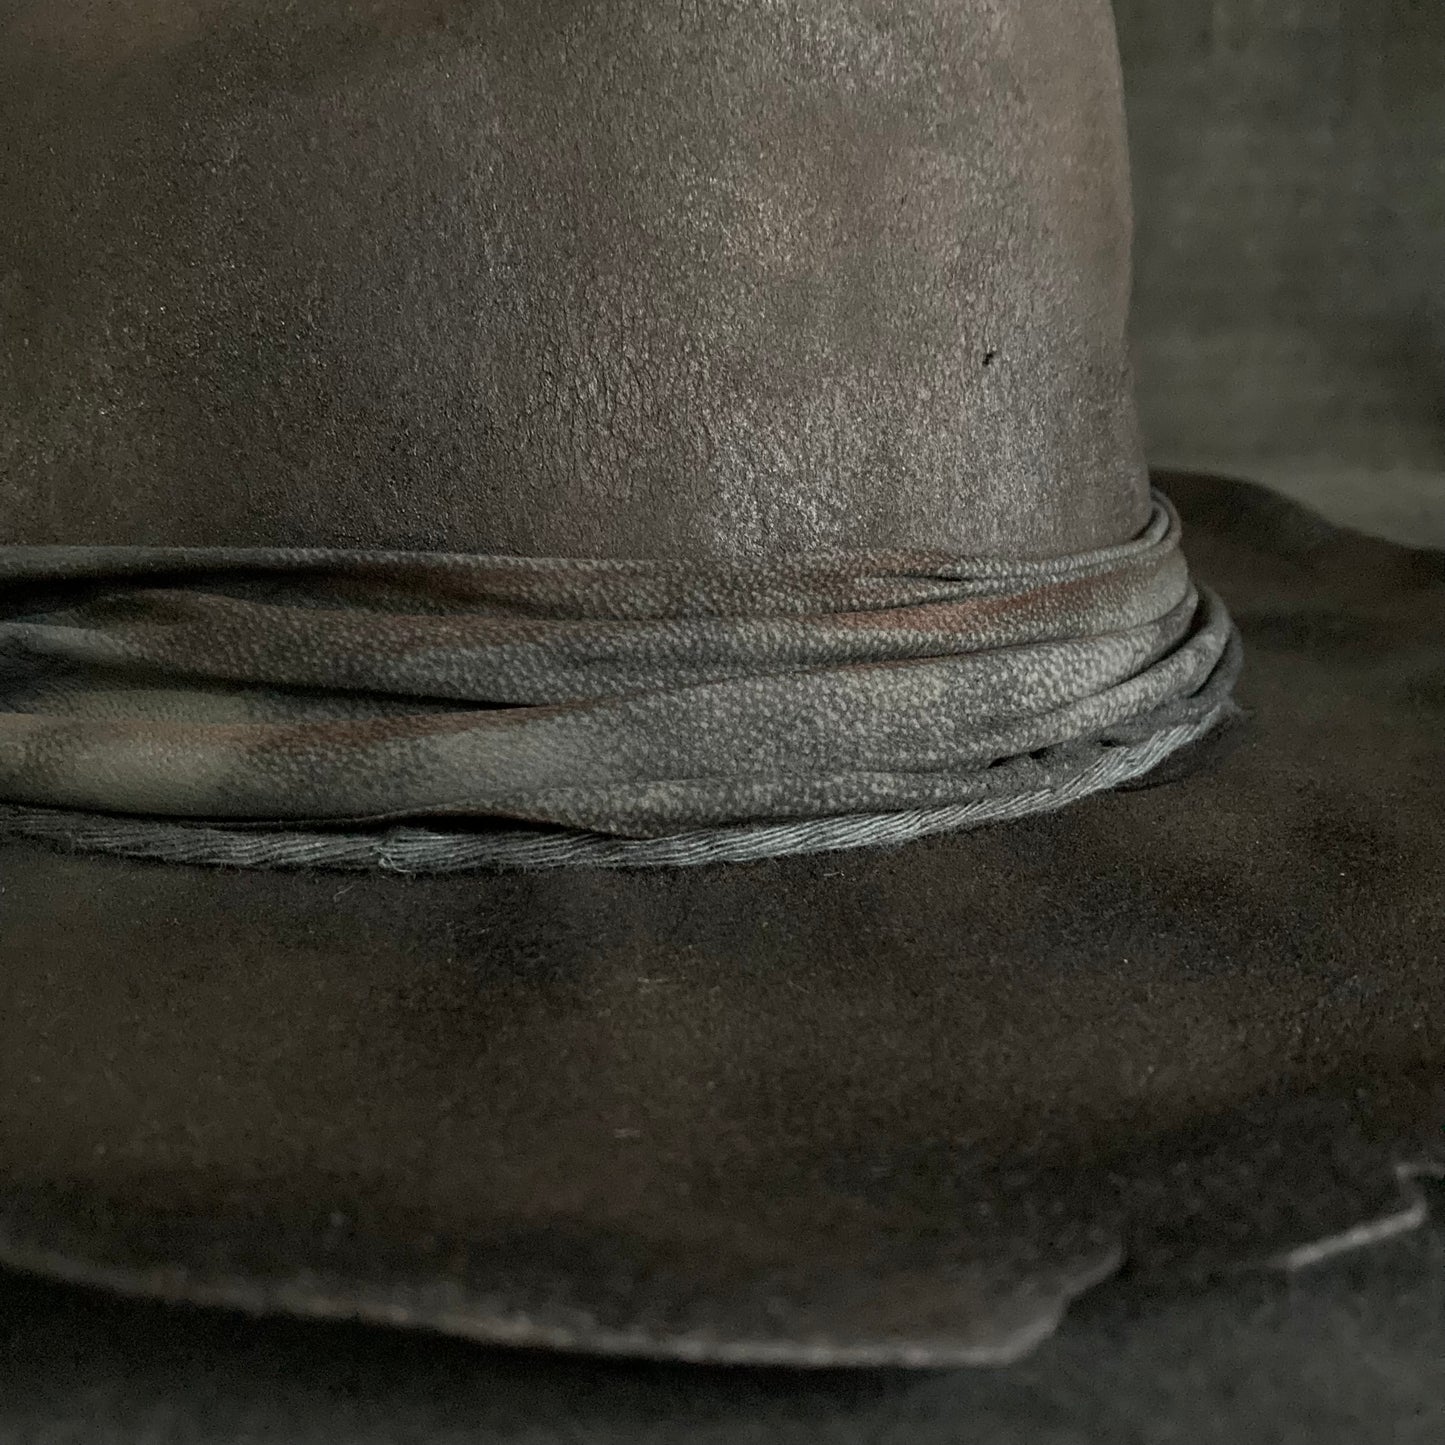 Charcoal burnt western hat